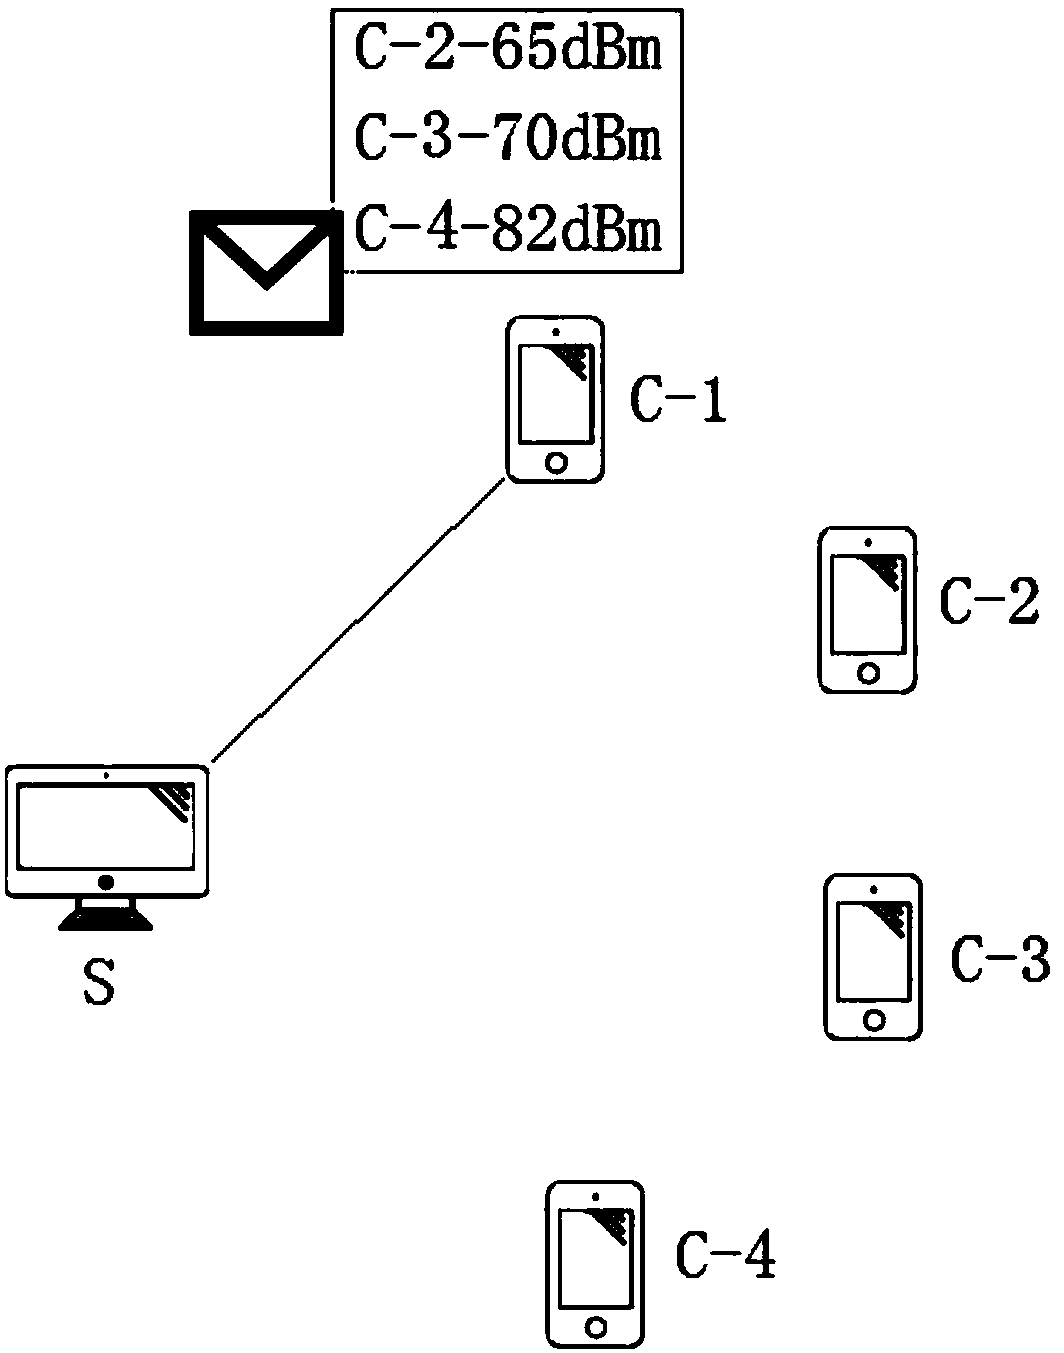 Ad hoc network node signal strength analysis method